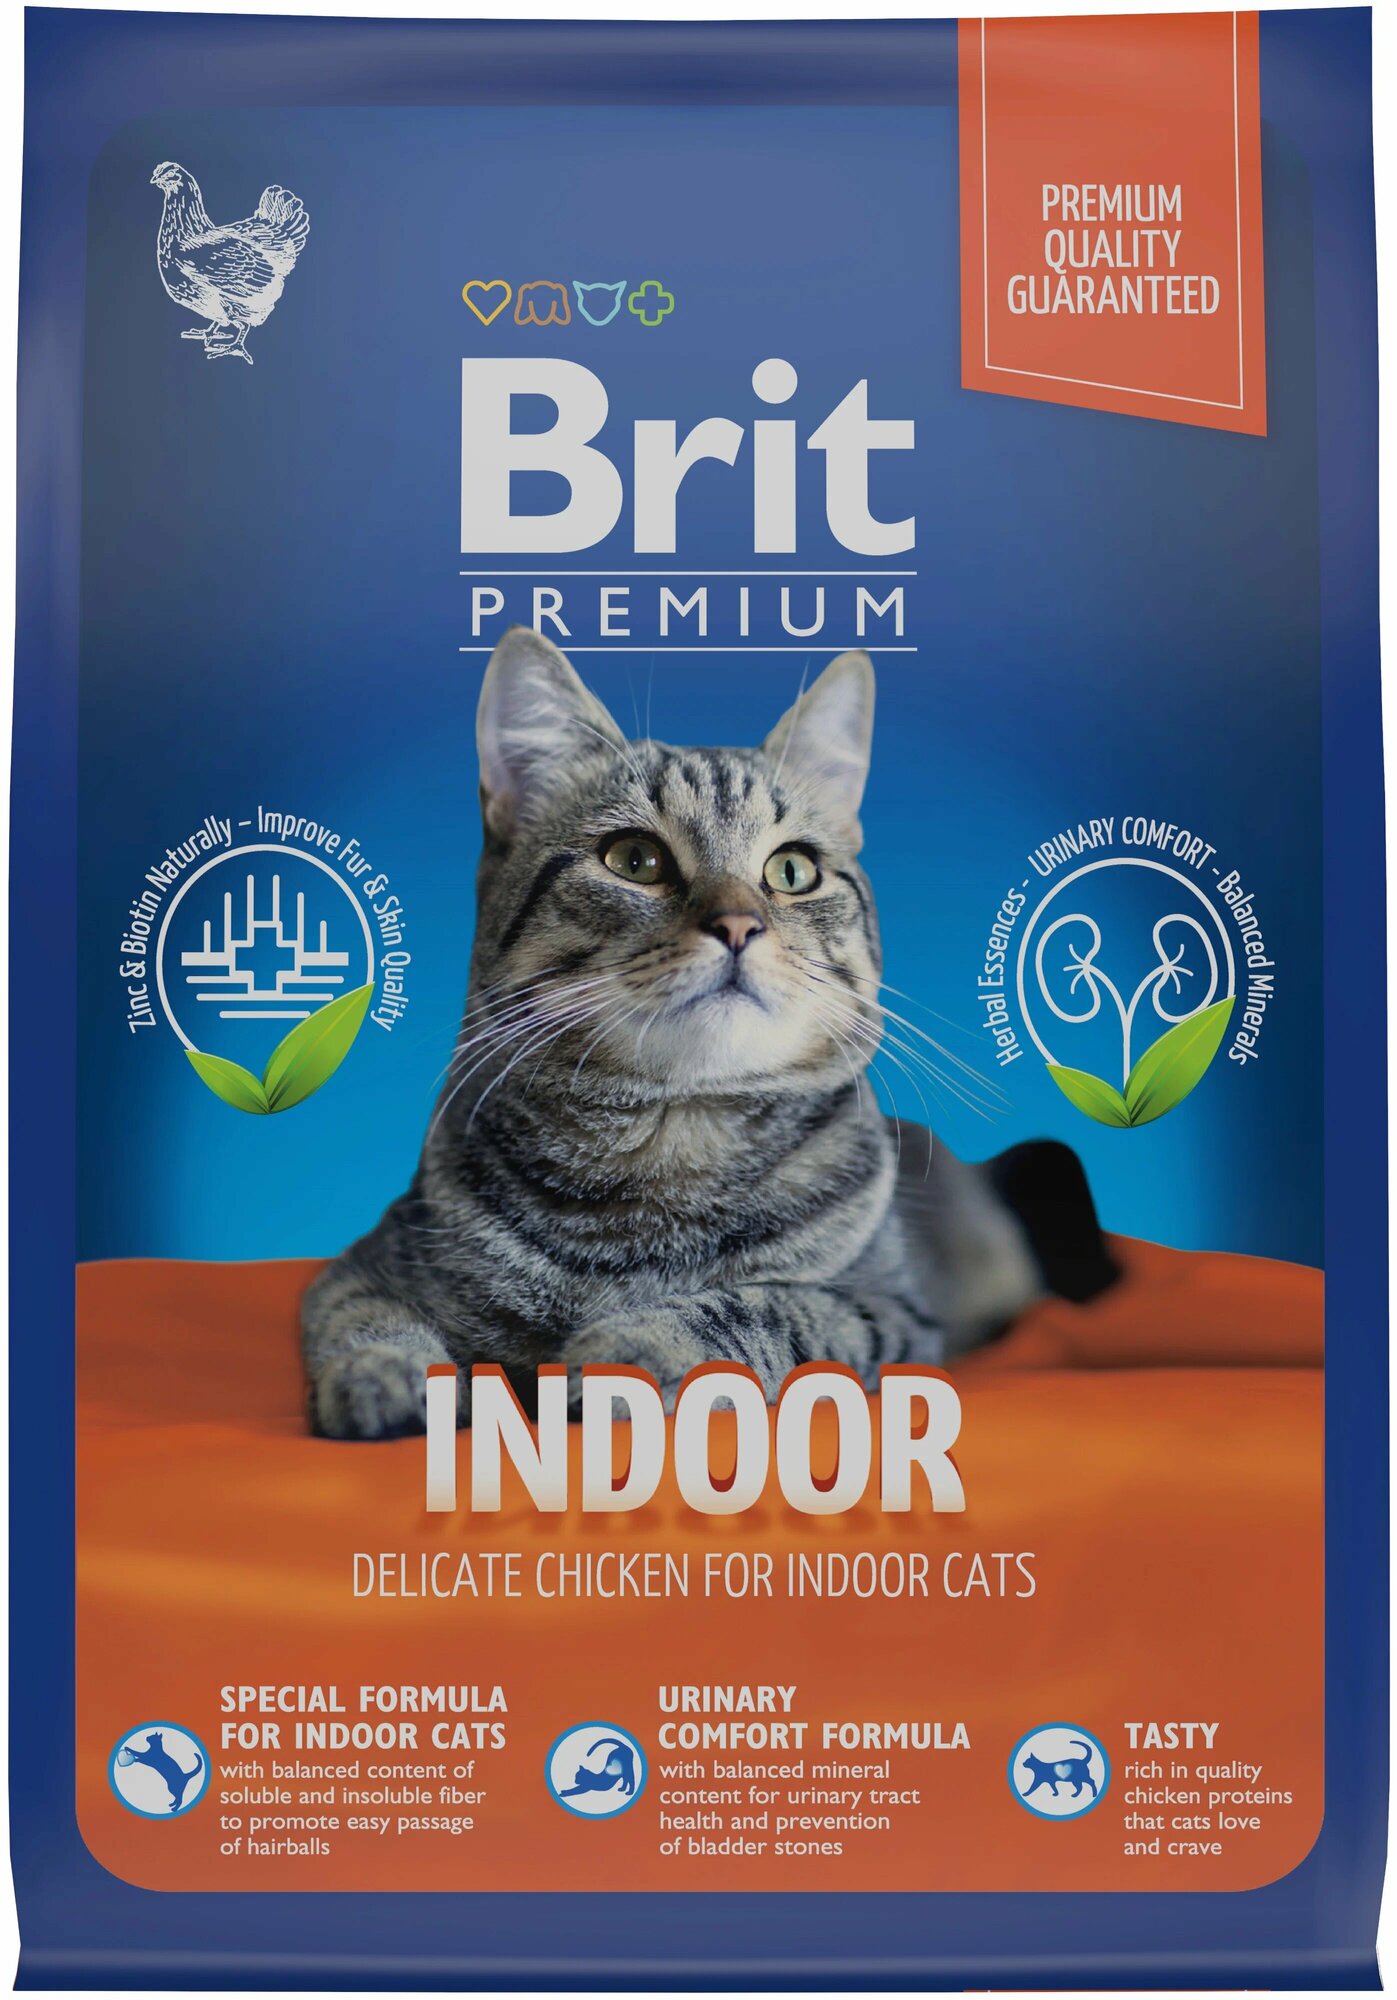 Сухой корм для кошек Brit Premium, с курицей 400 г